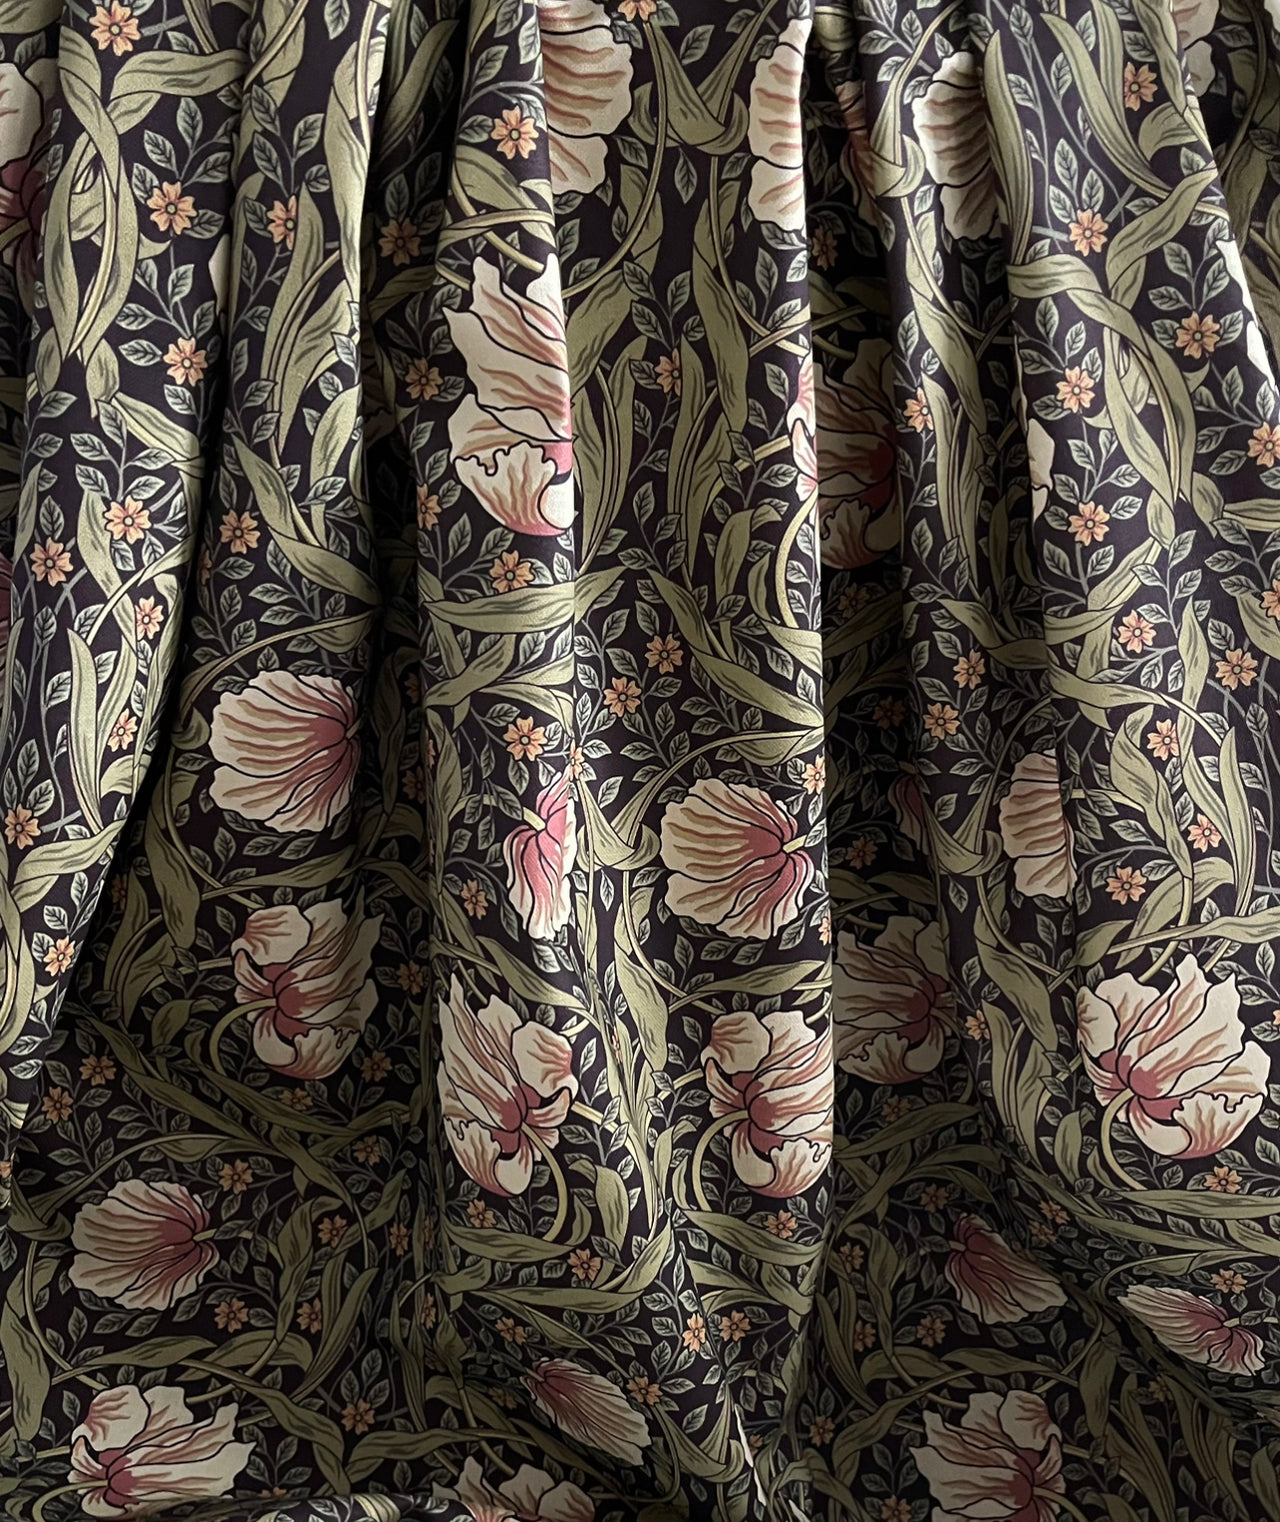 William Morris Pimpernel Pattern Curtains - Custom-Made to Measure, Pencil Pleat, Bespoke Home Decor - Pair of Elegant Drapes